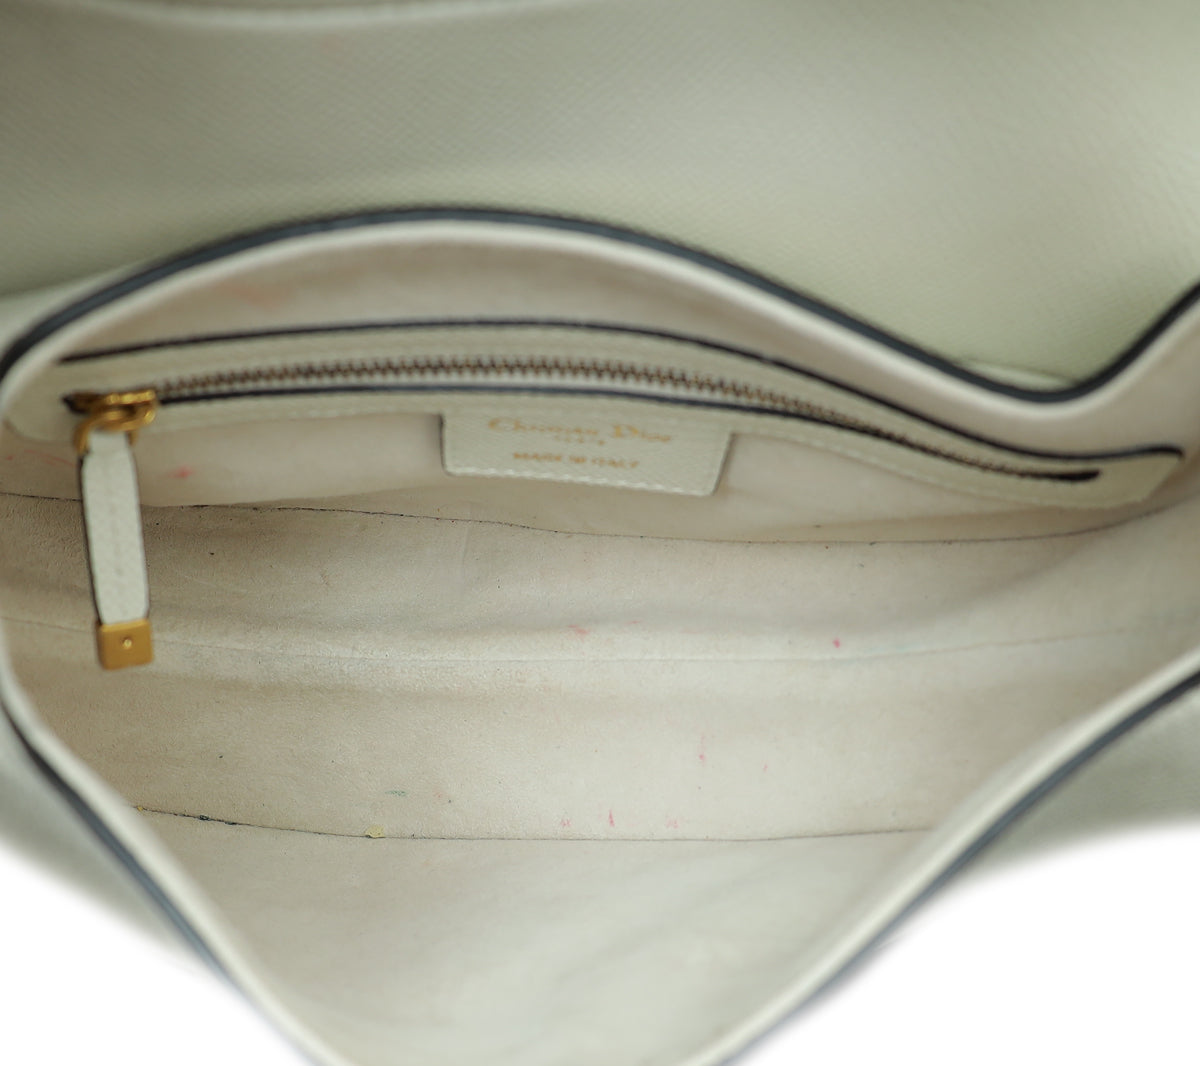 Christian Dior White Saddle Medium Bag